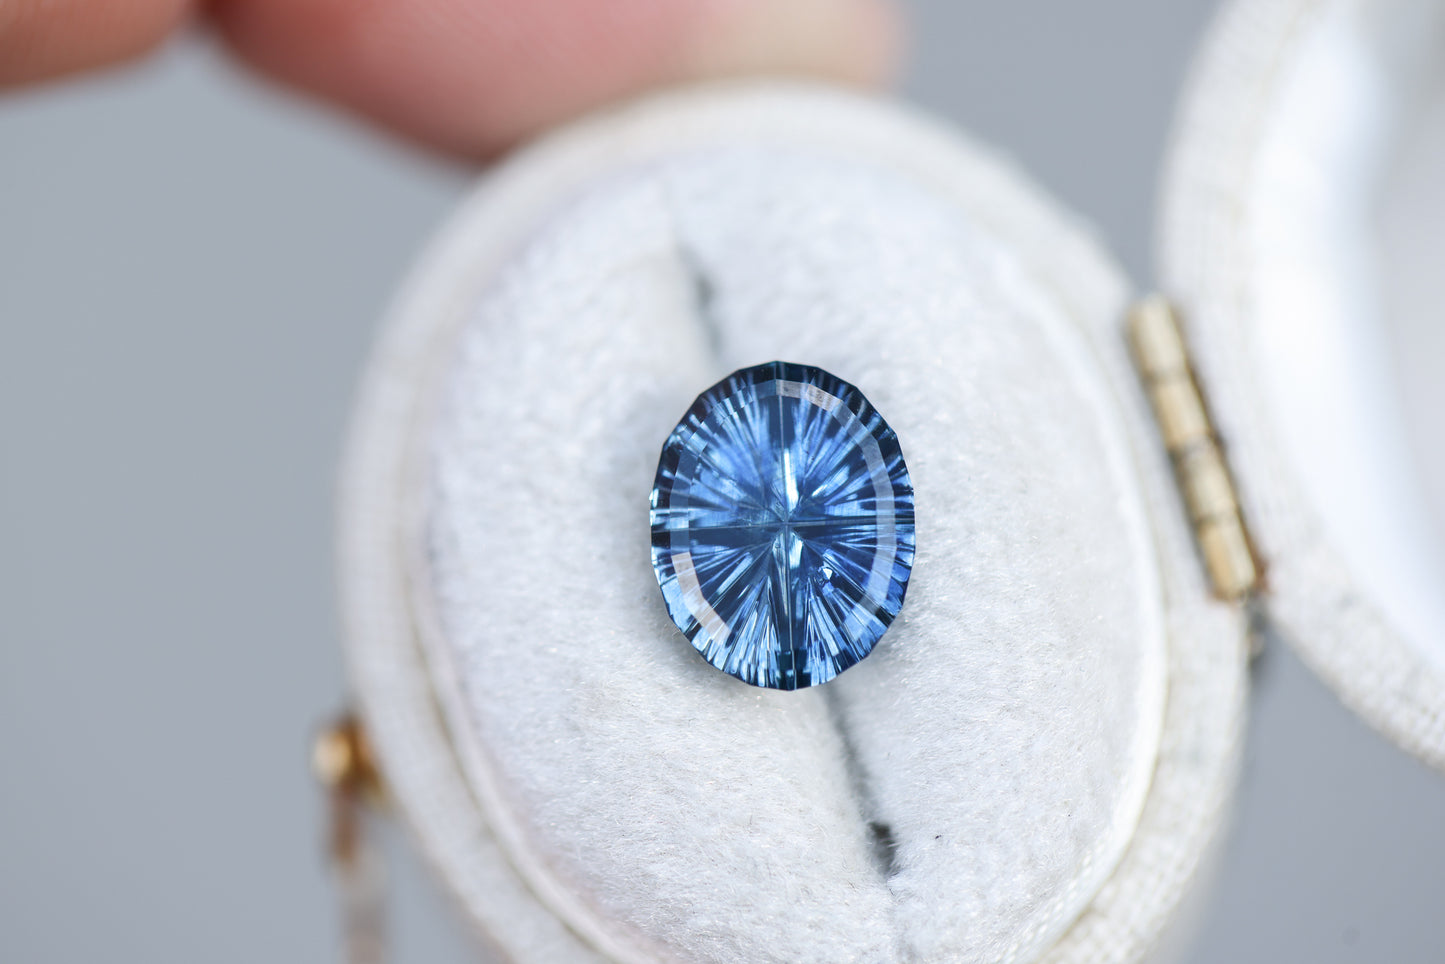 2.51ct oval blue sapphire - Starbrite cut by John Dyer